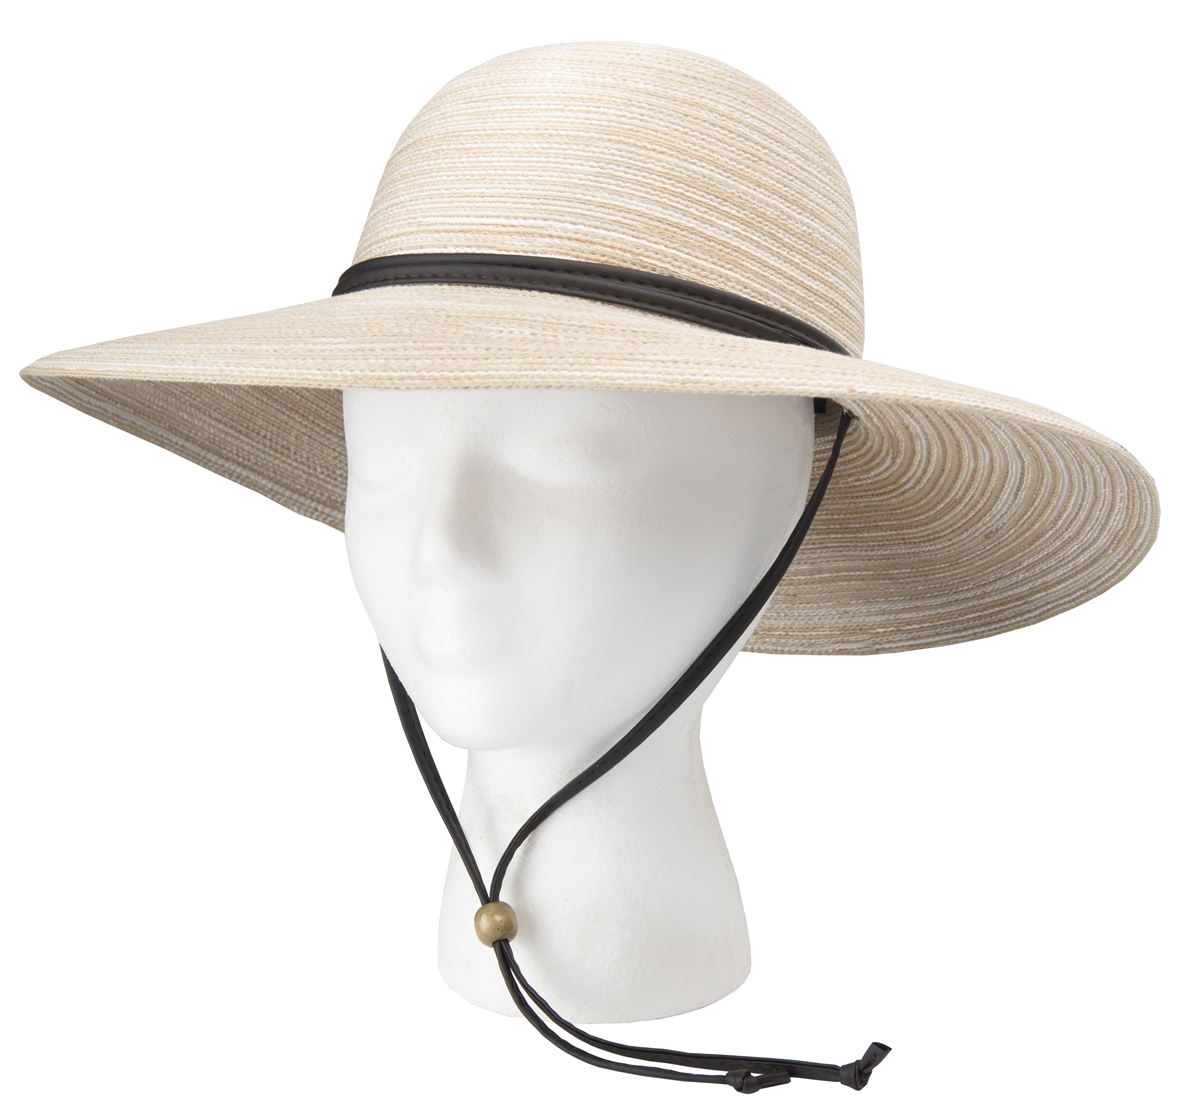 Women's Braided Sun Hat - Earth Stone UPF 50+